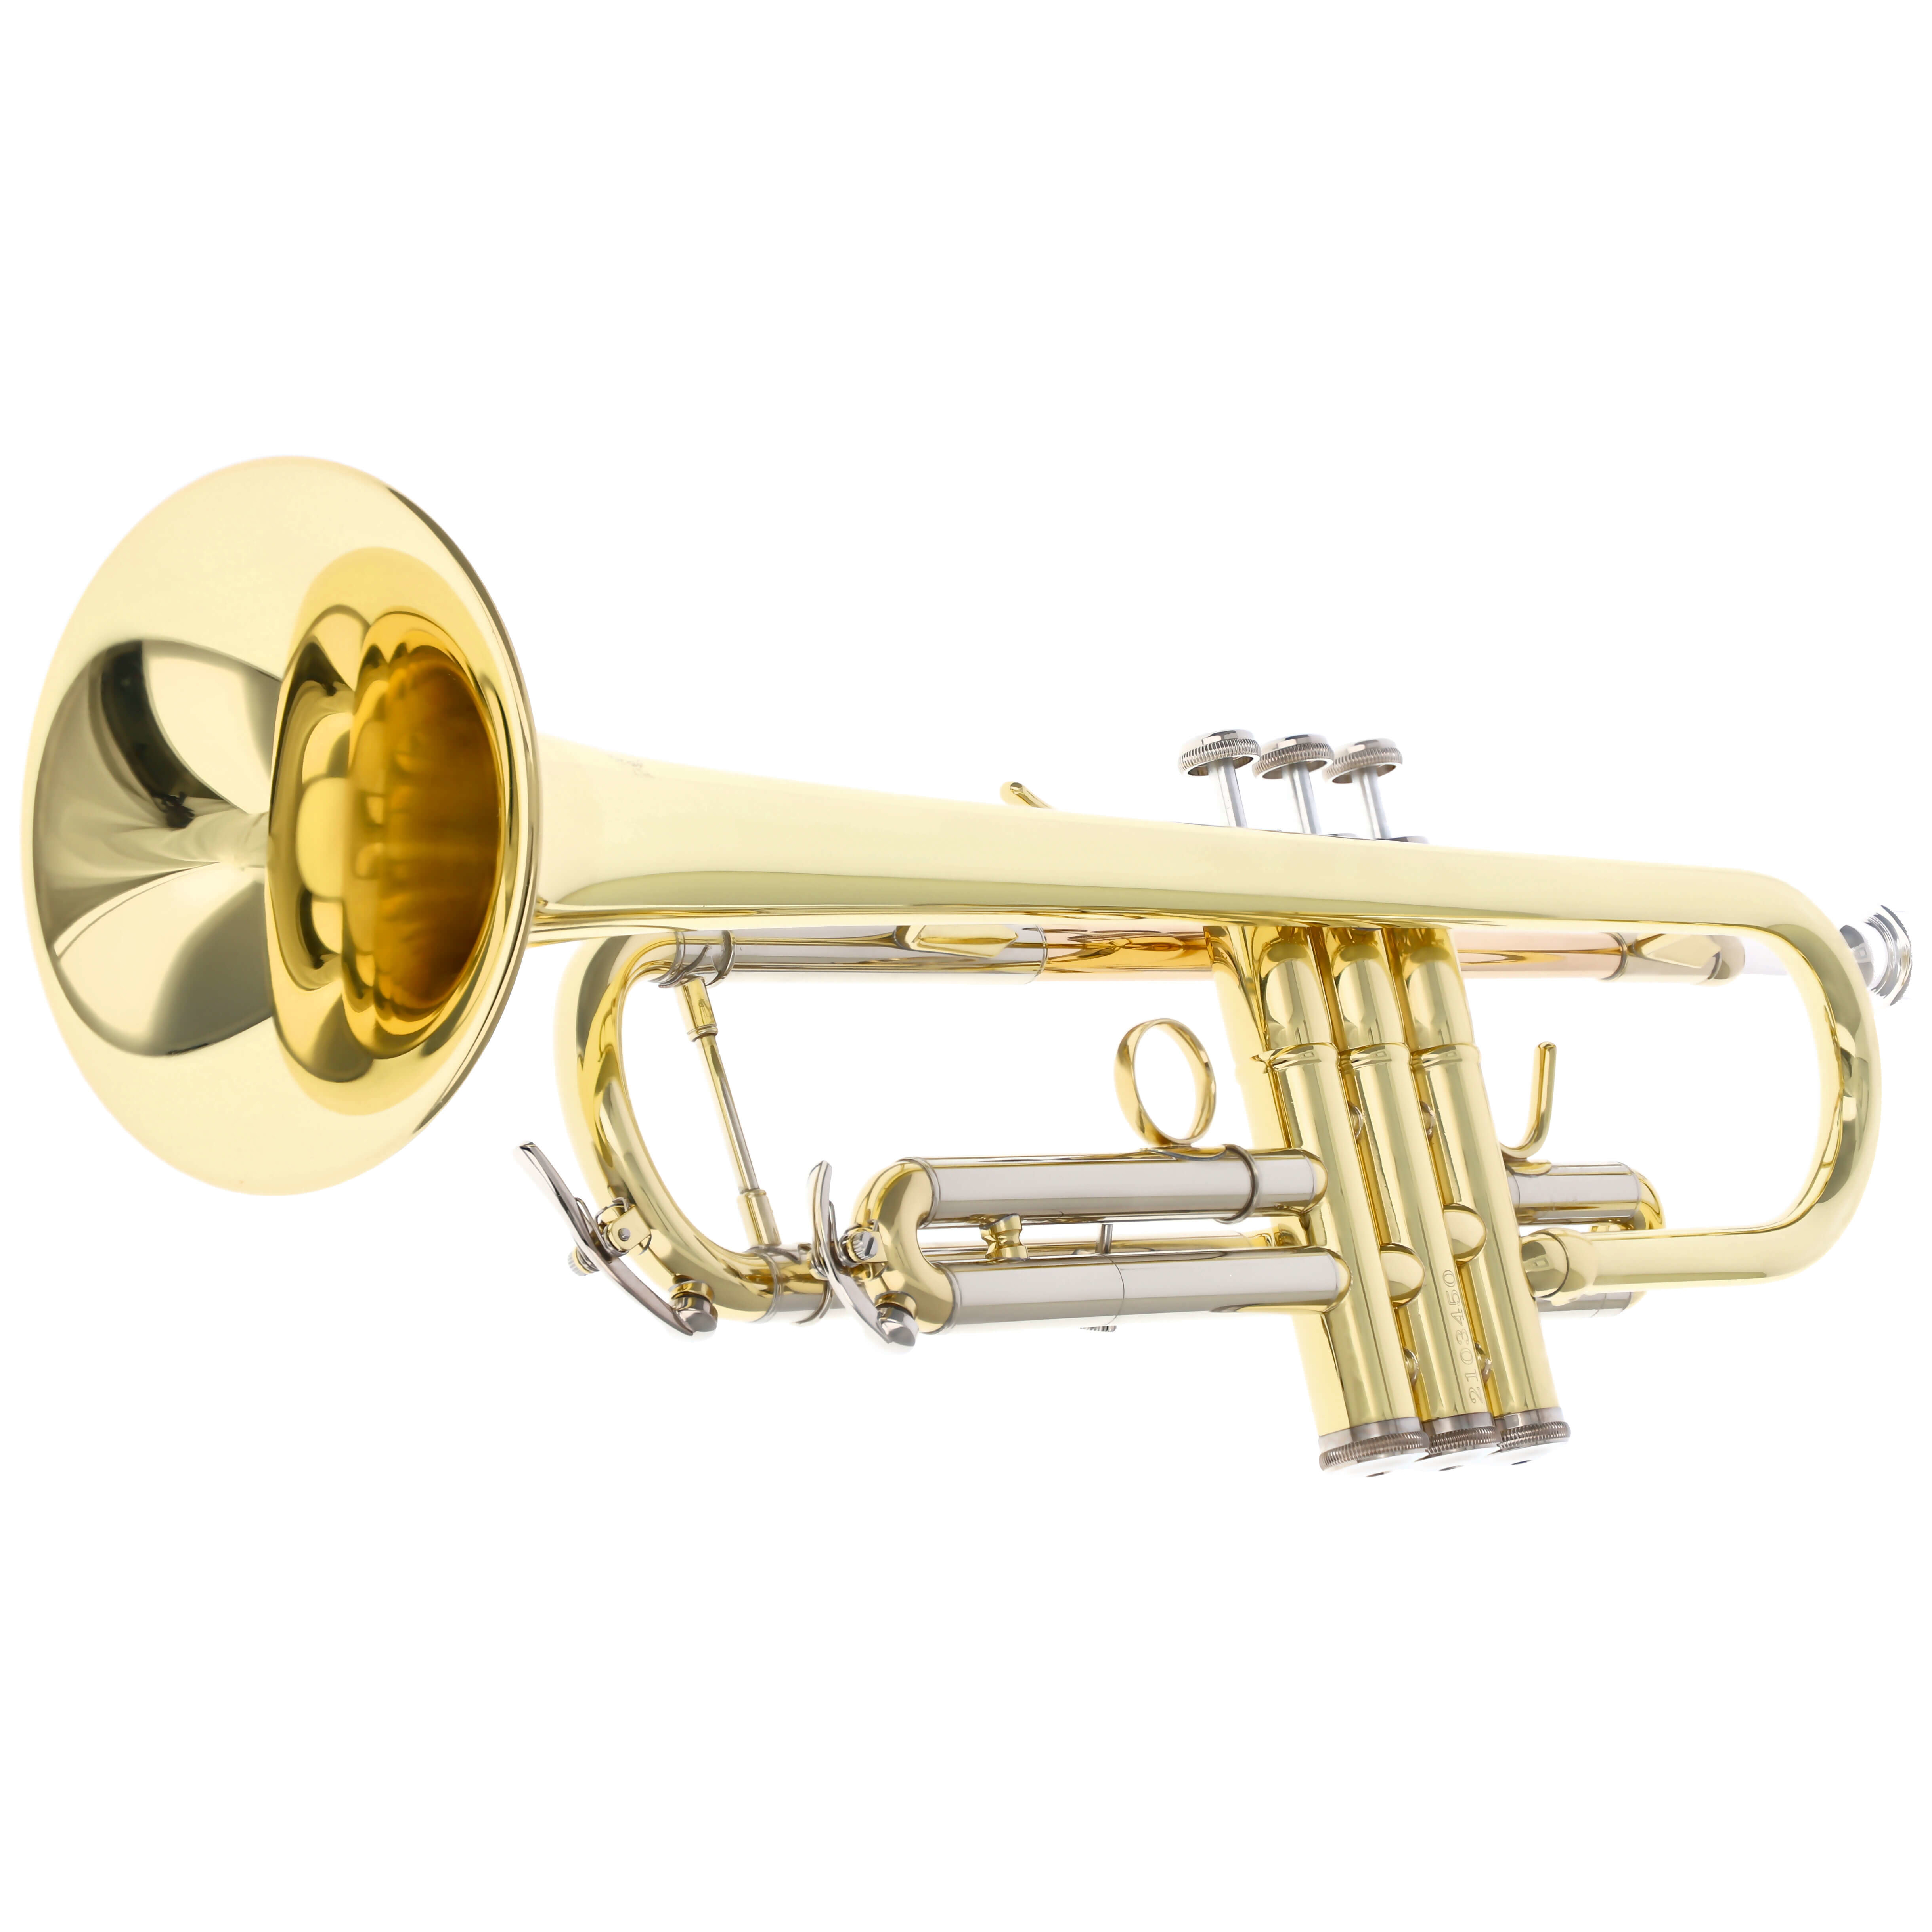 B&S BS210-1-0 Prodige B-Trompete   - SHOWROOM MODELL -